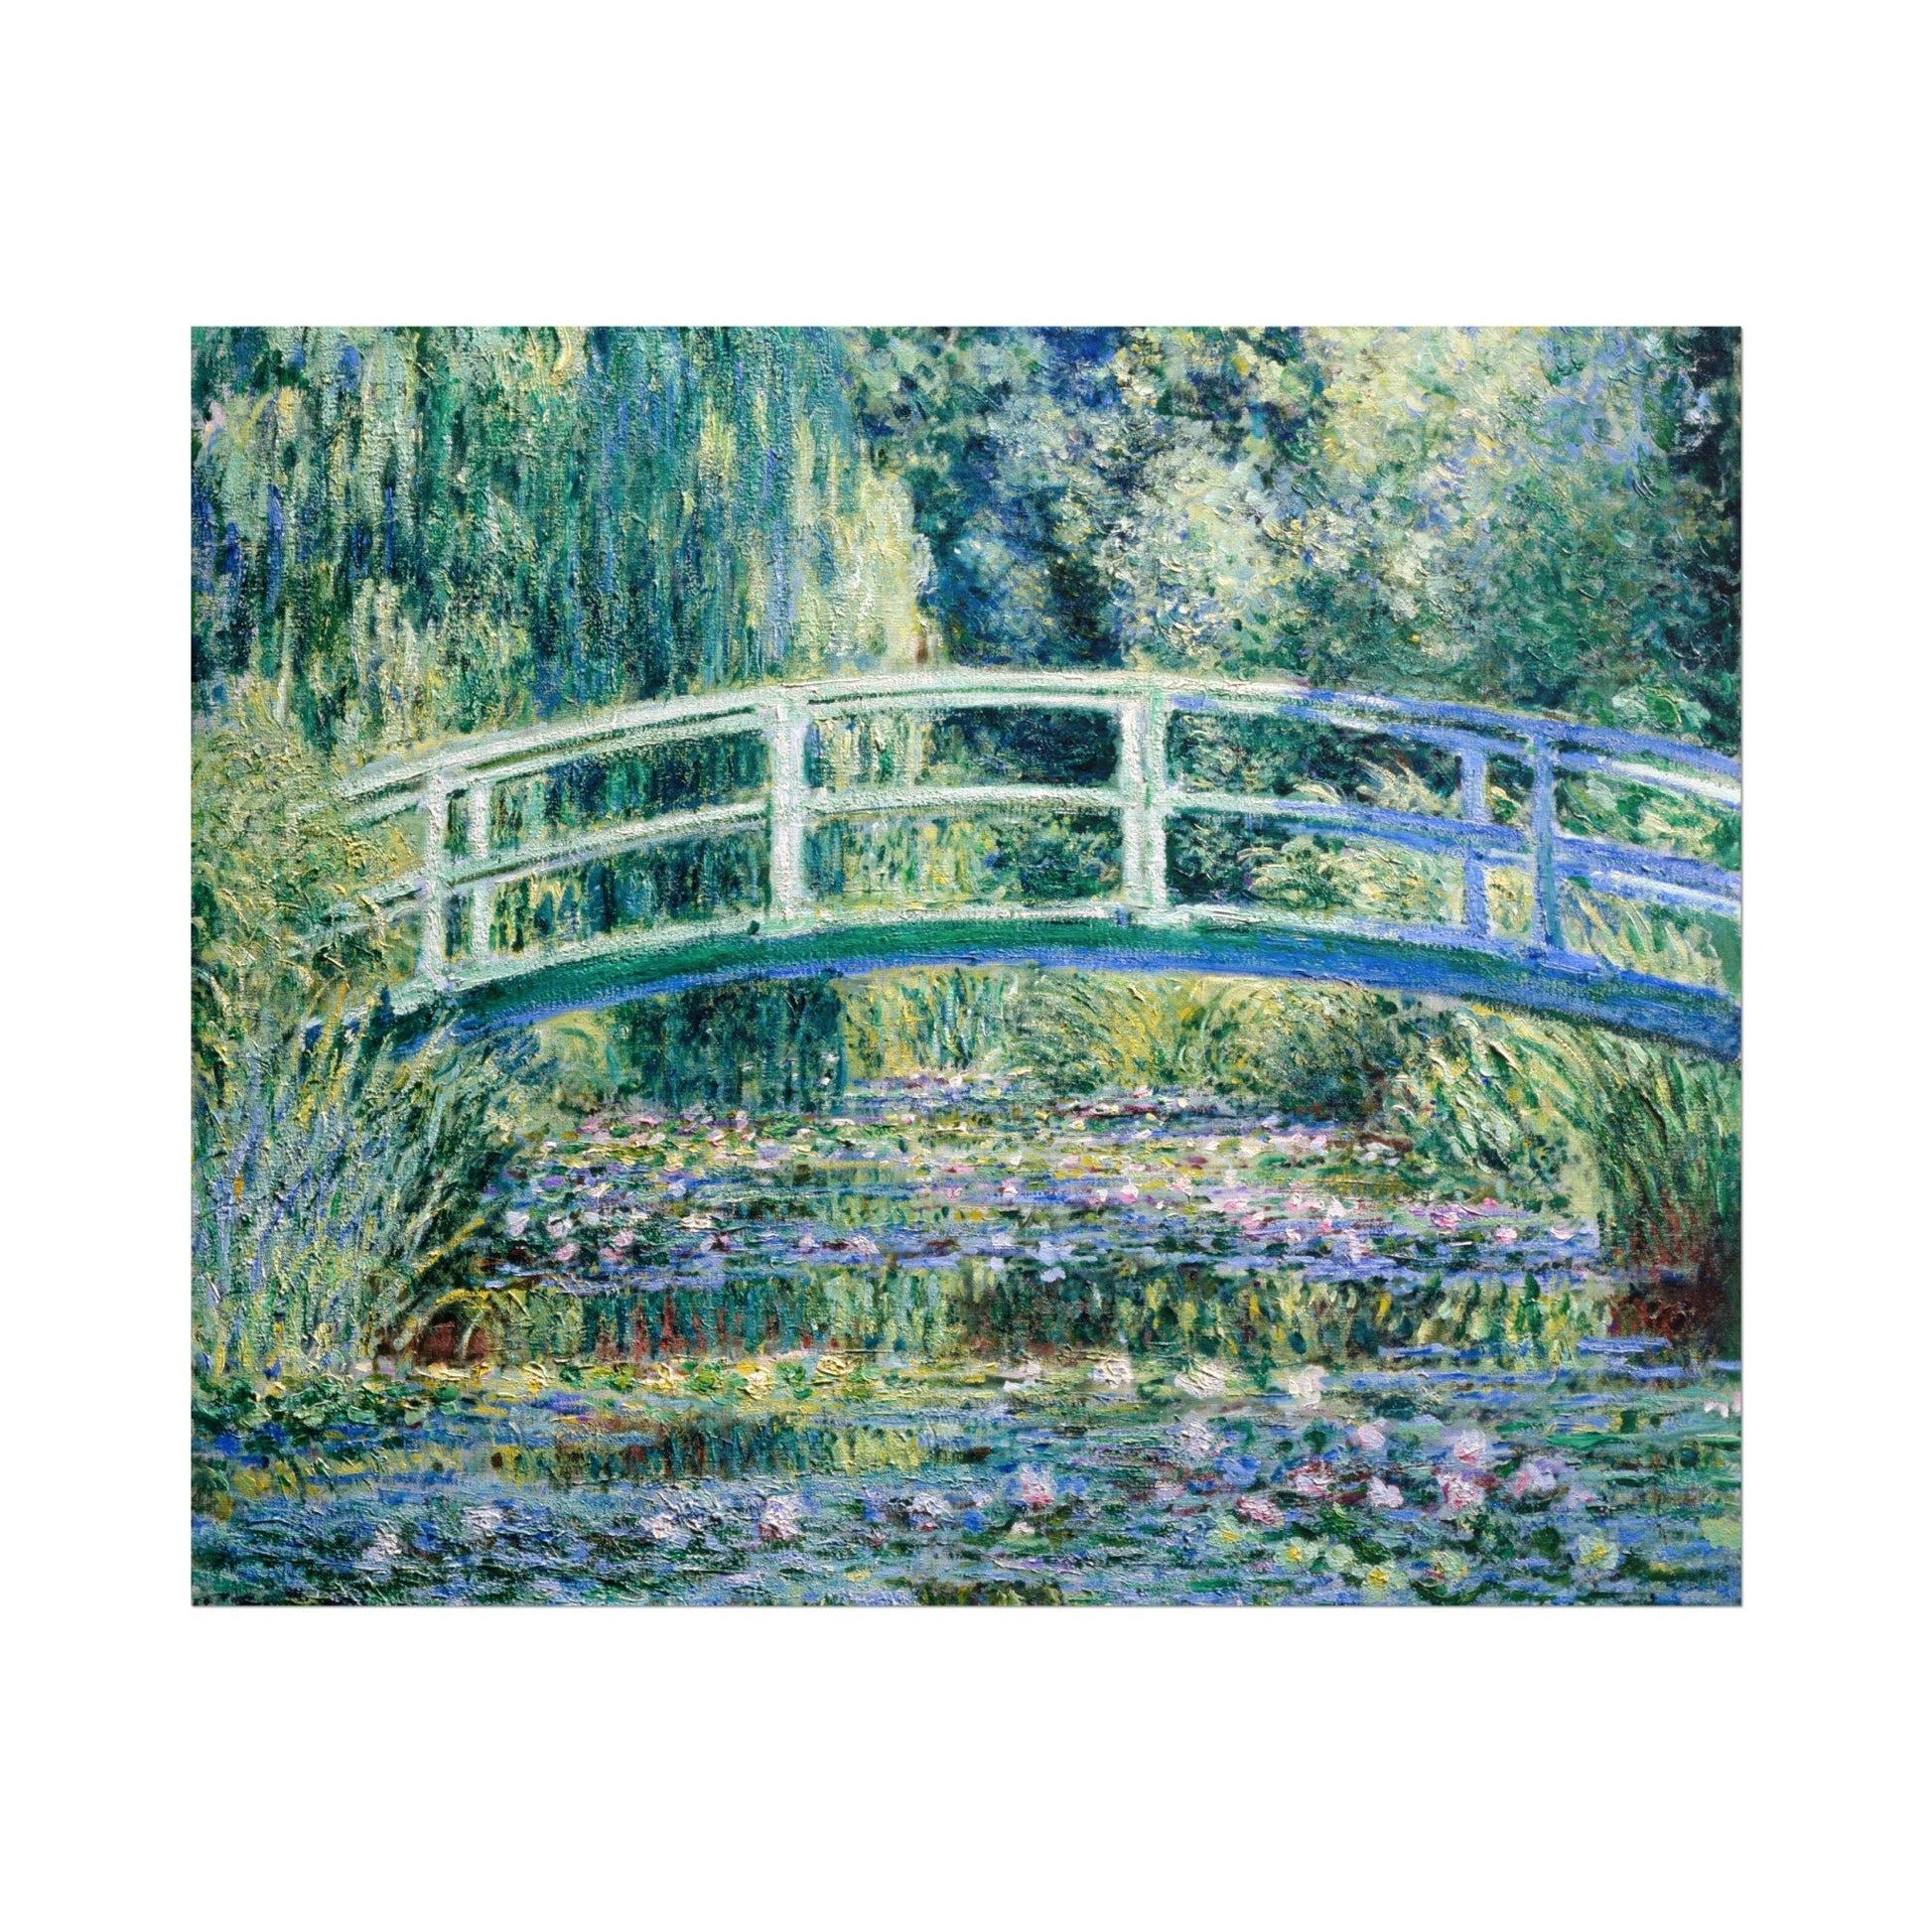 CLAUDE MONET - Water Lilies And Japanese Bridge - Pathos Studio - Art Prints